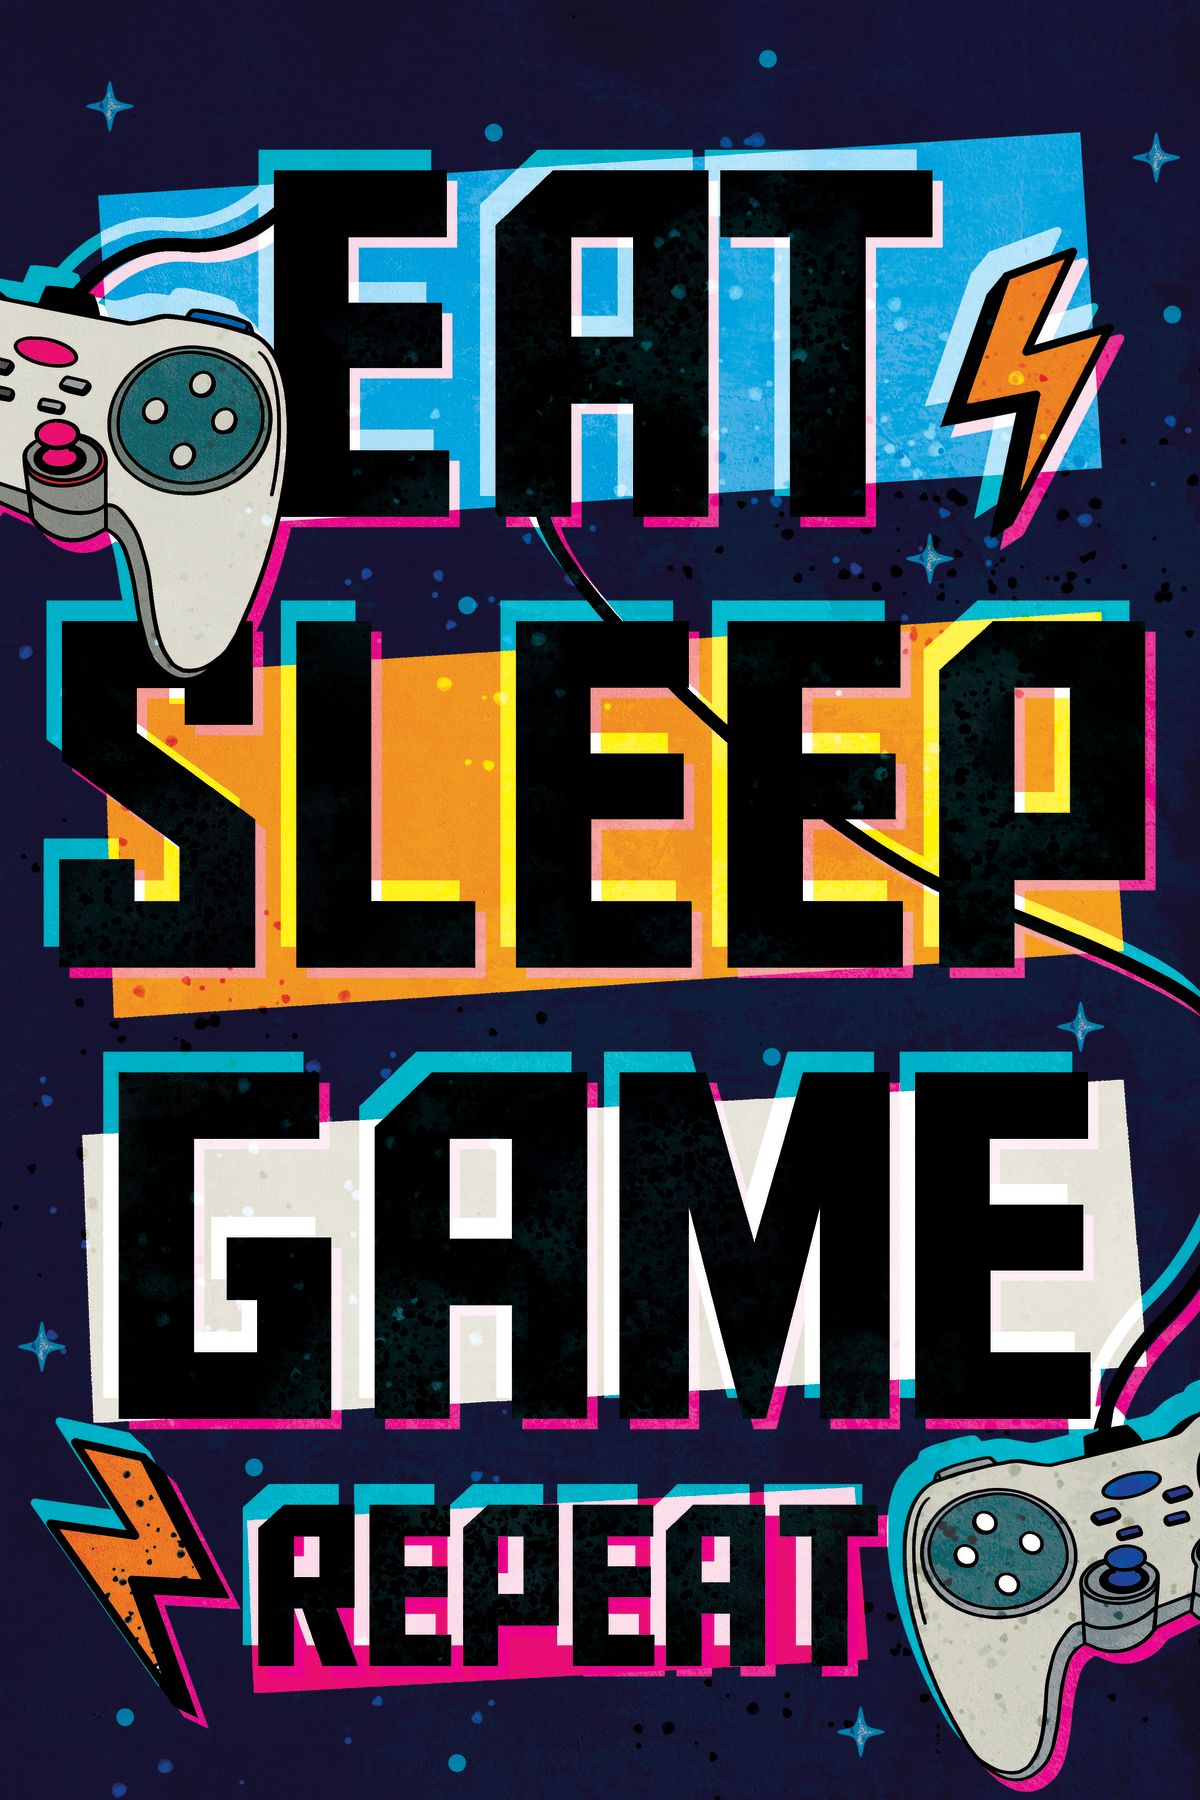 Eat Sleep Game Poster